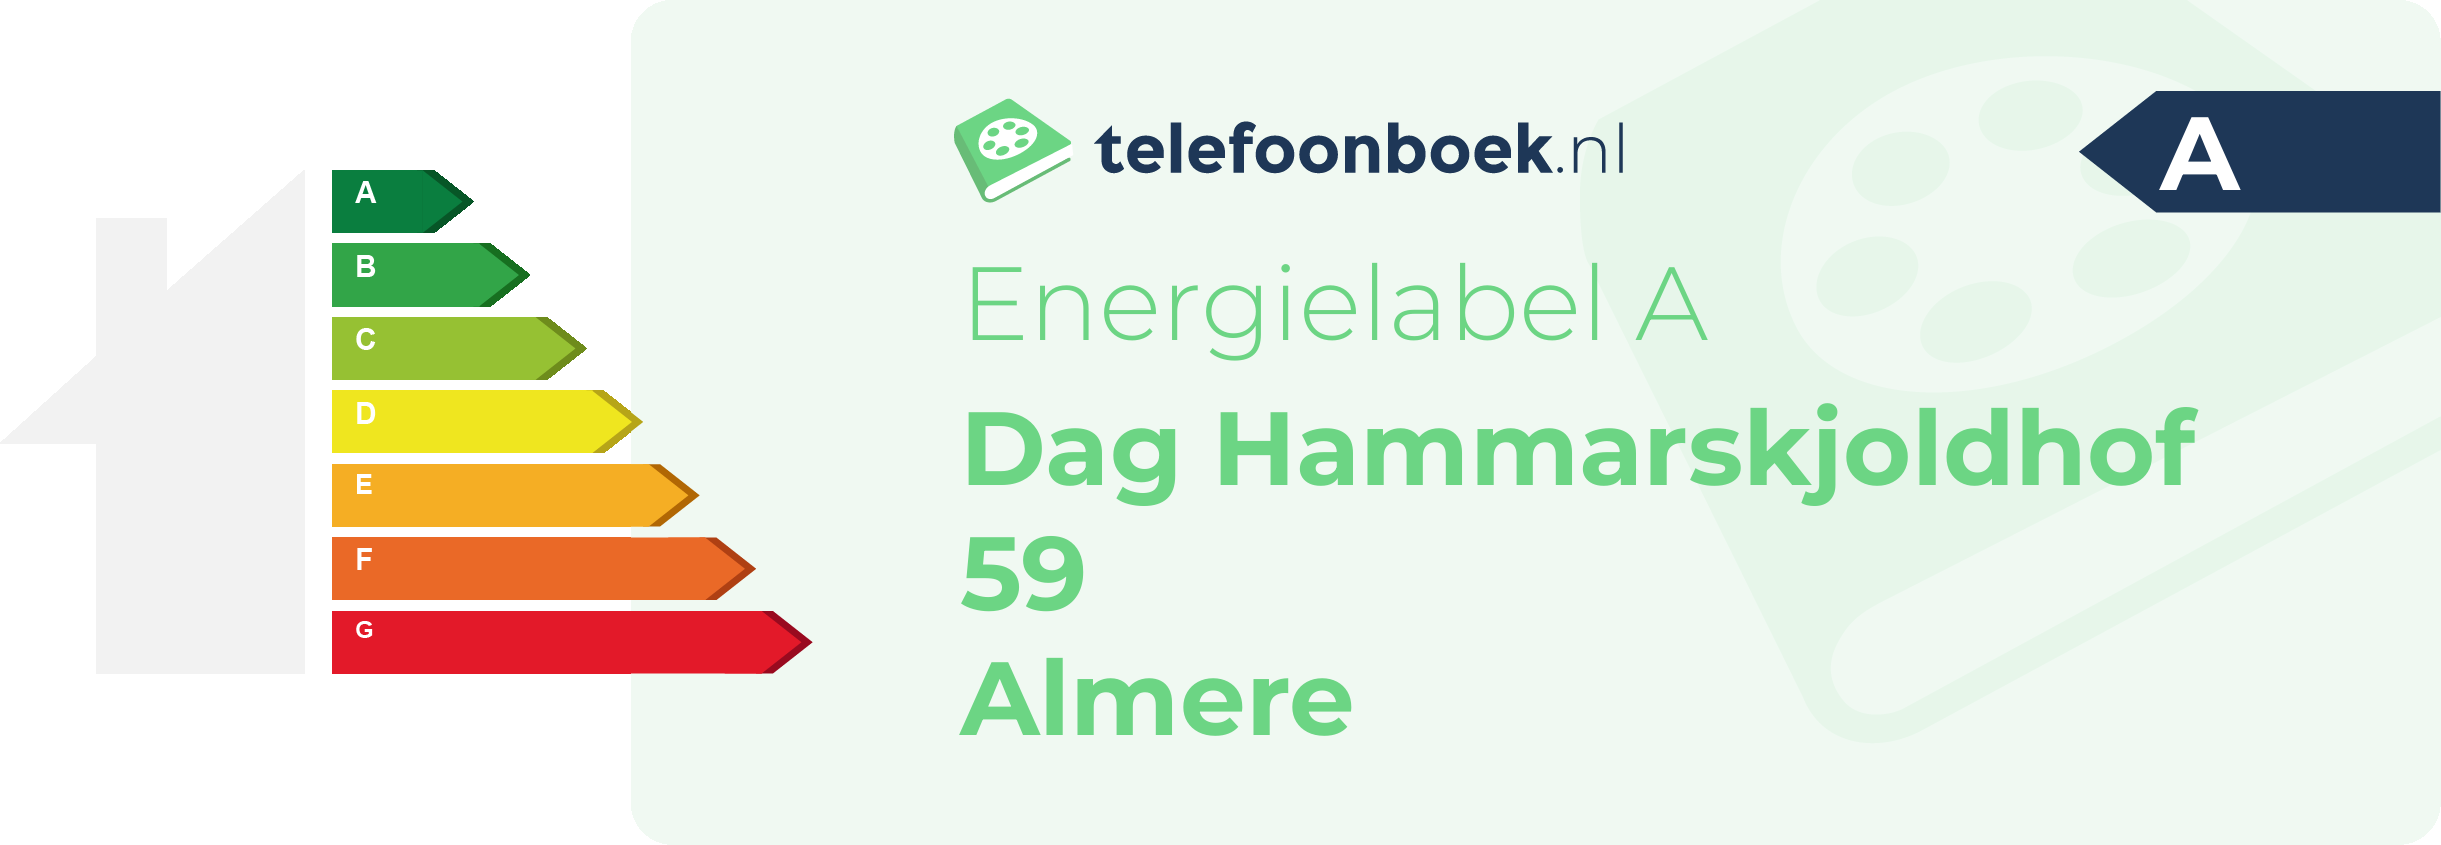 Energielabel Dag Hammarskjoldhof 59 Almere